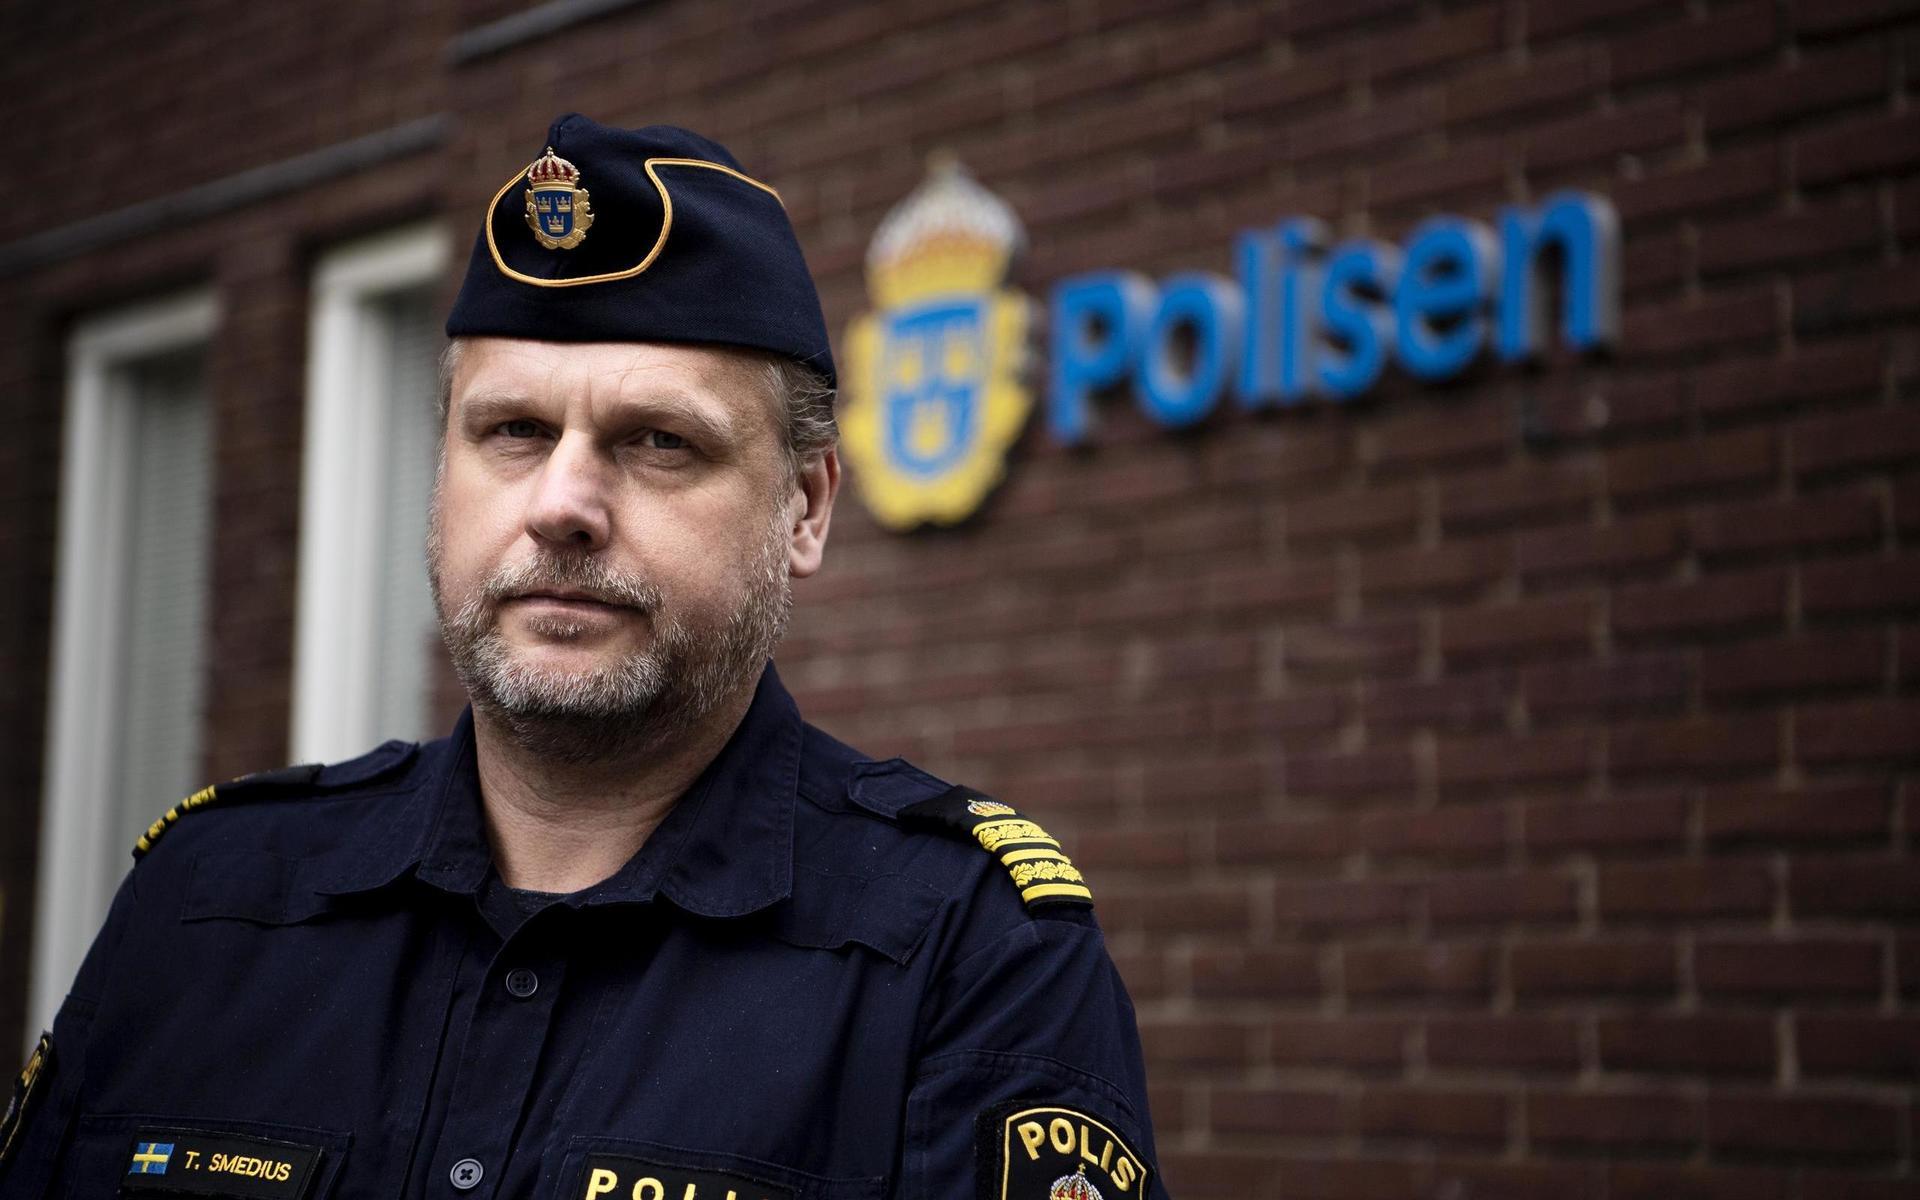 Polischef Teodor Smedius vid polishuset Göteborg.